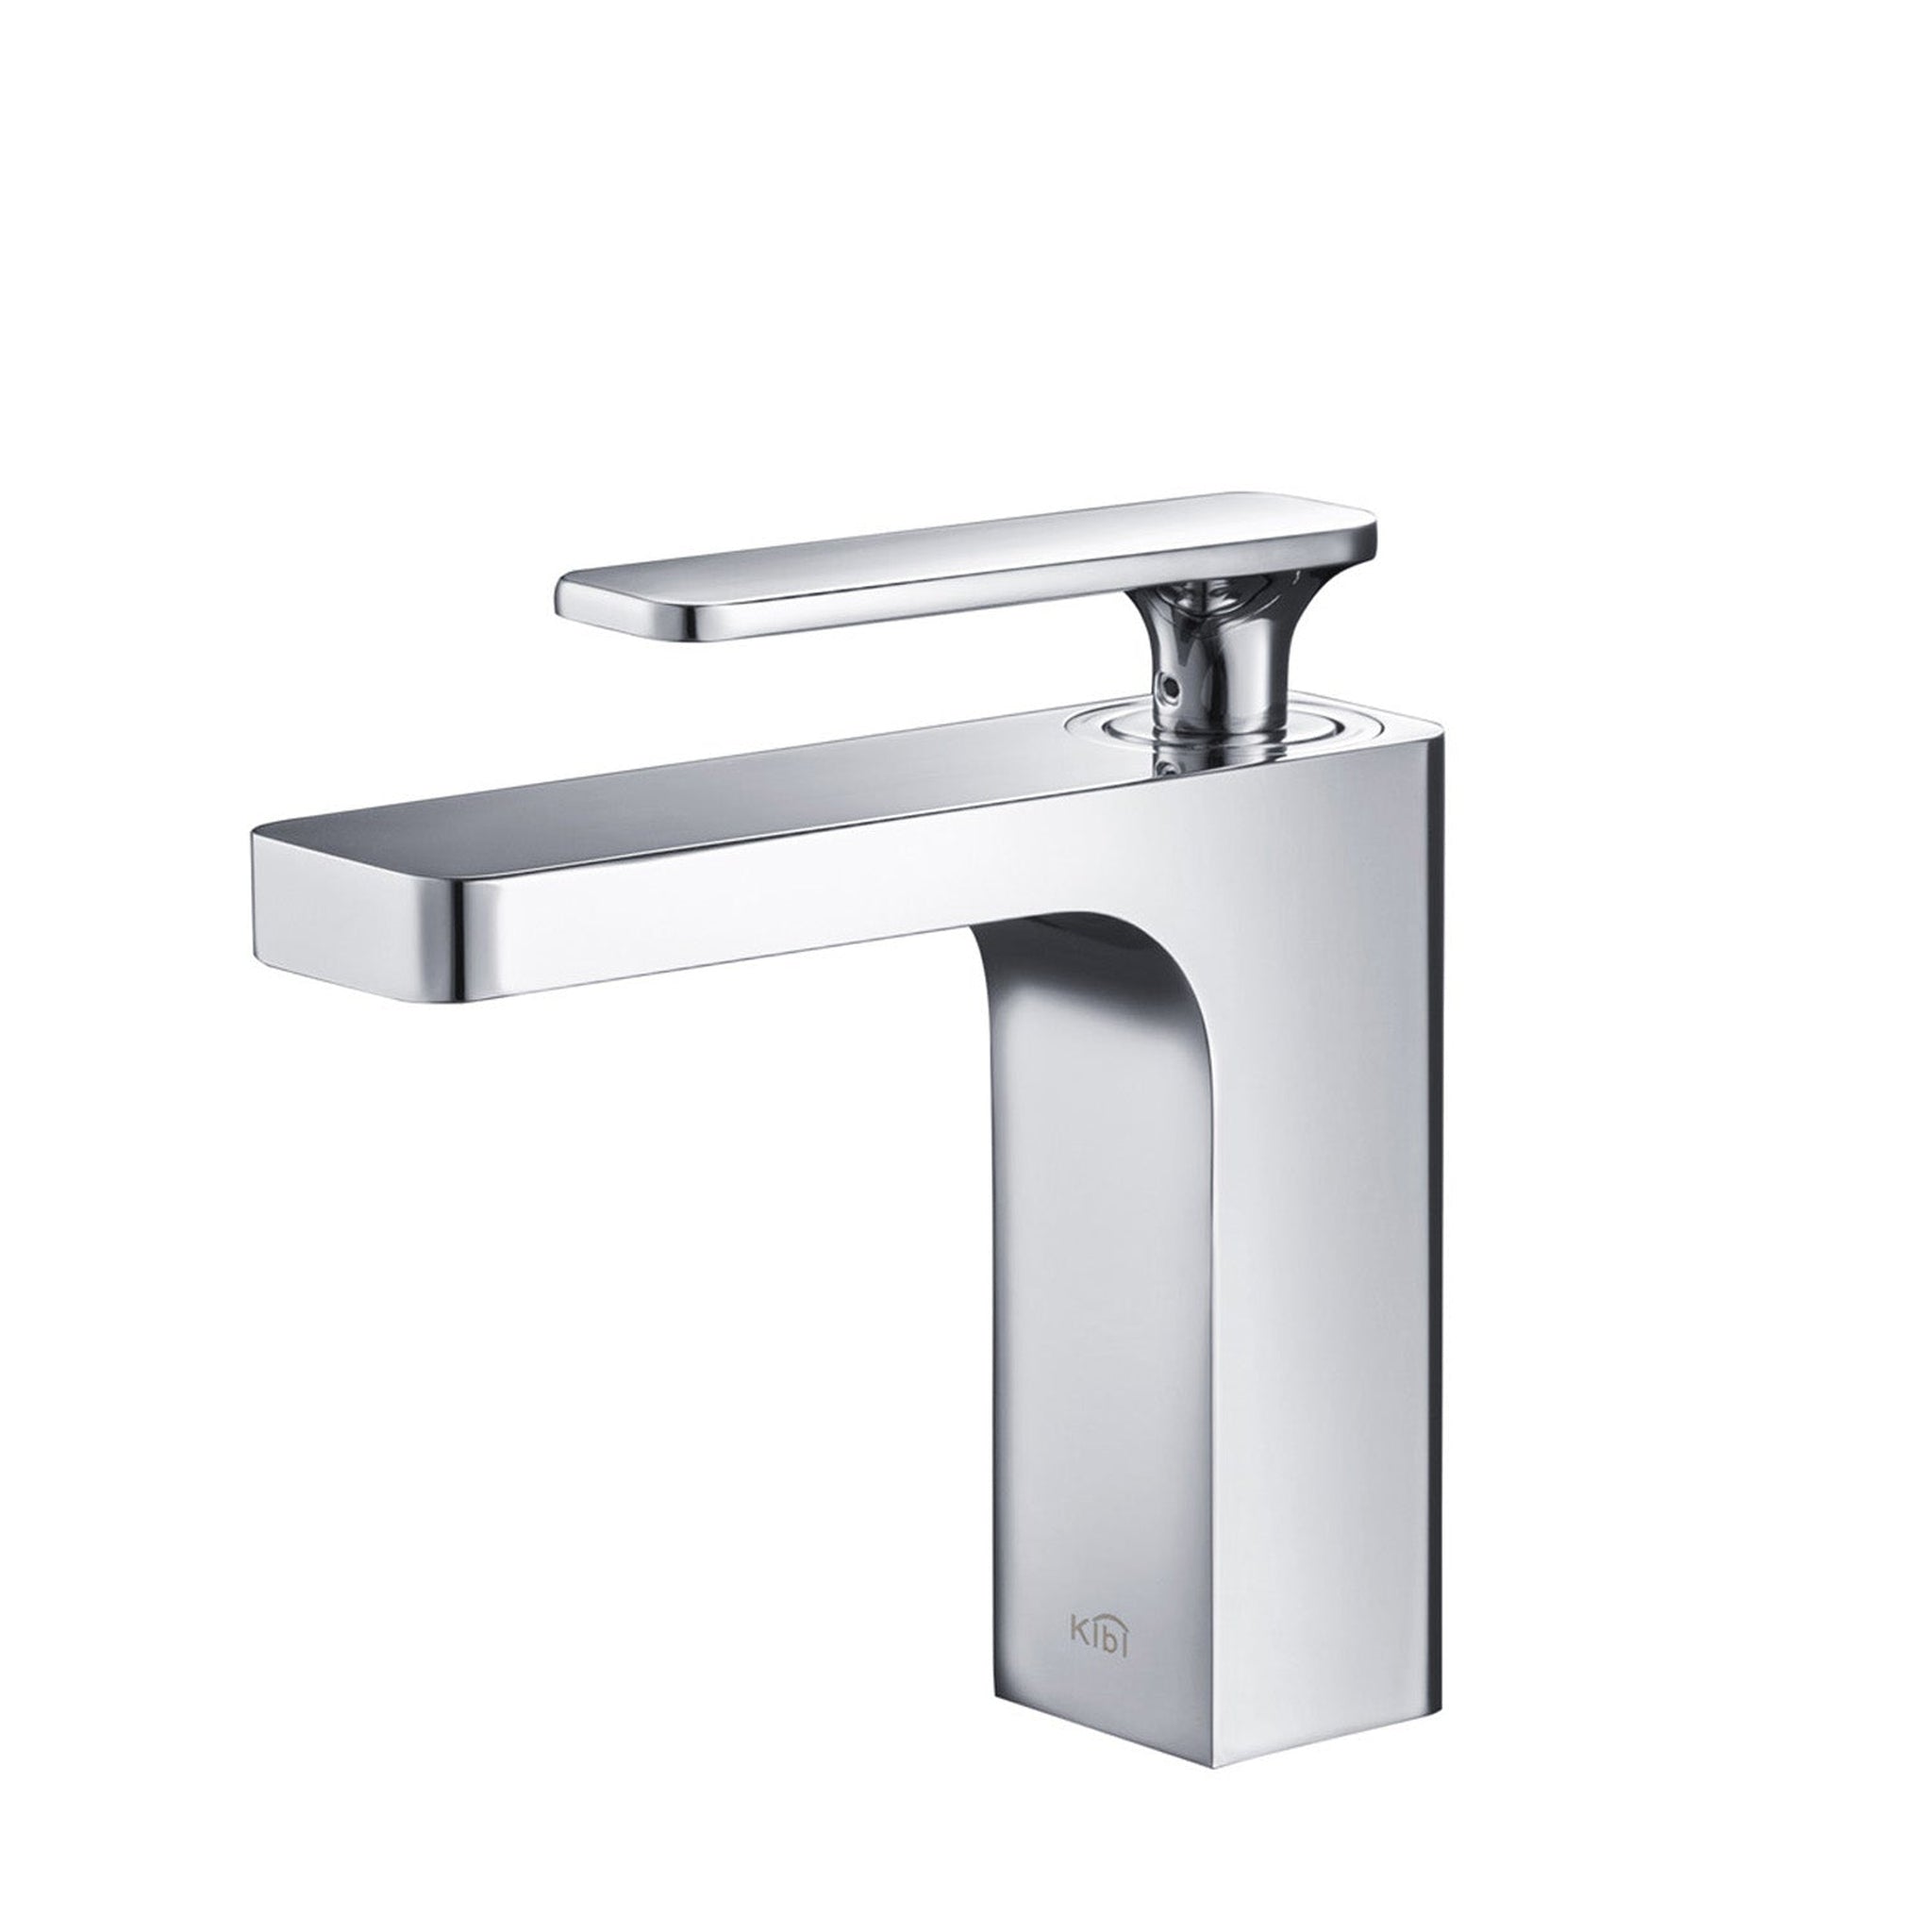 KIBI, KIBI Infinity Single Handle Chrome Solid Brass Bathroom Vanity Sink Faucet